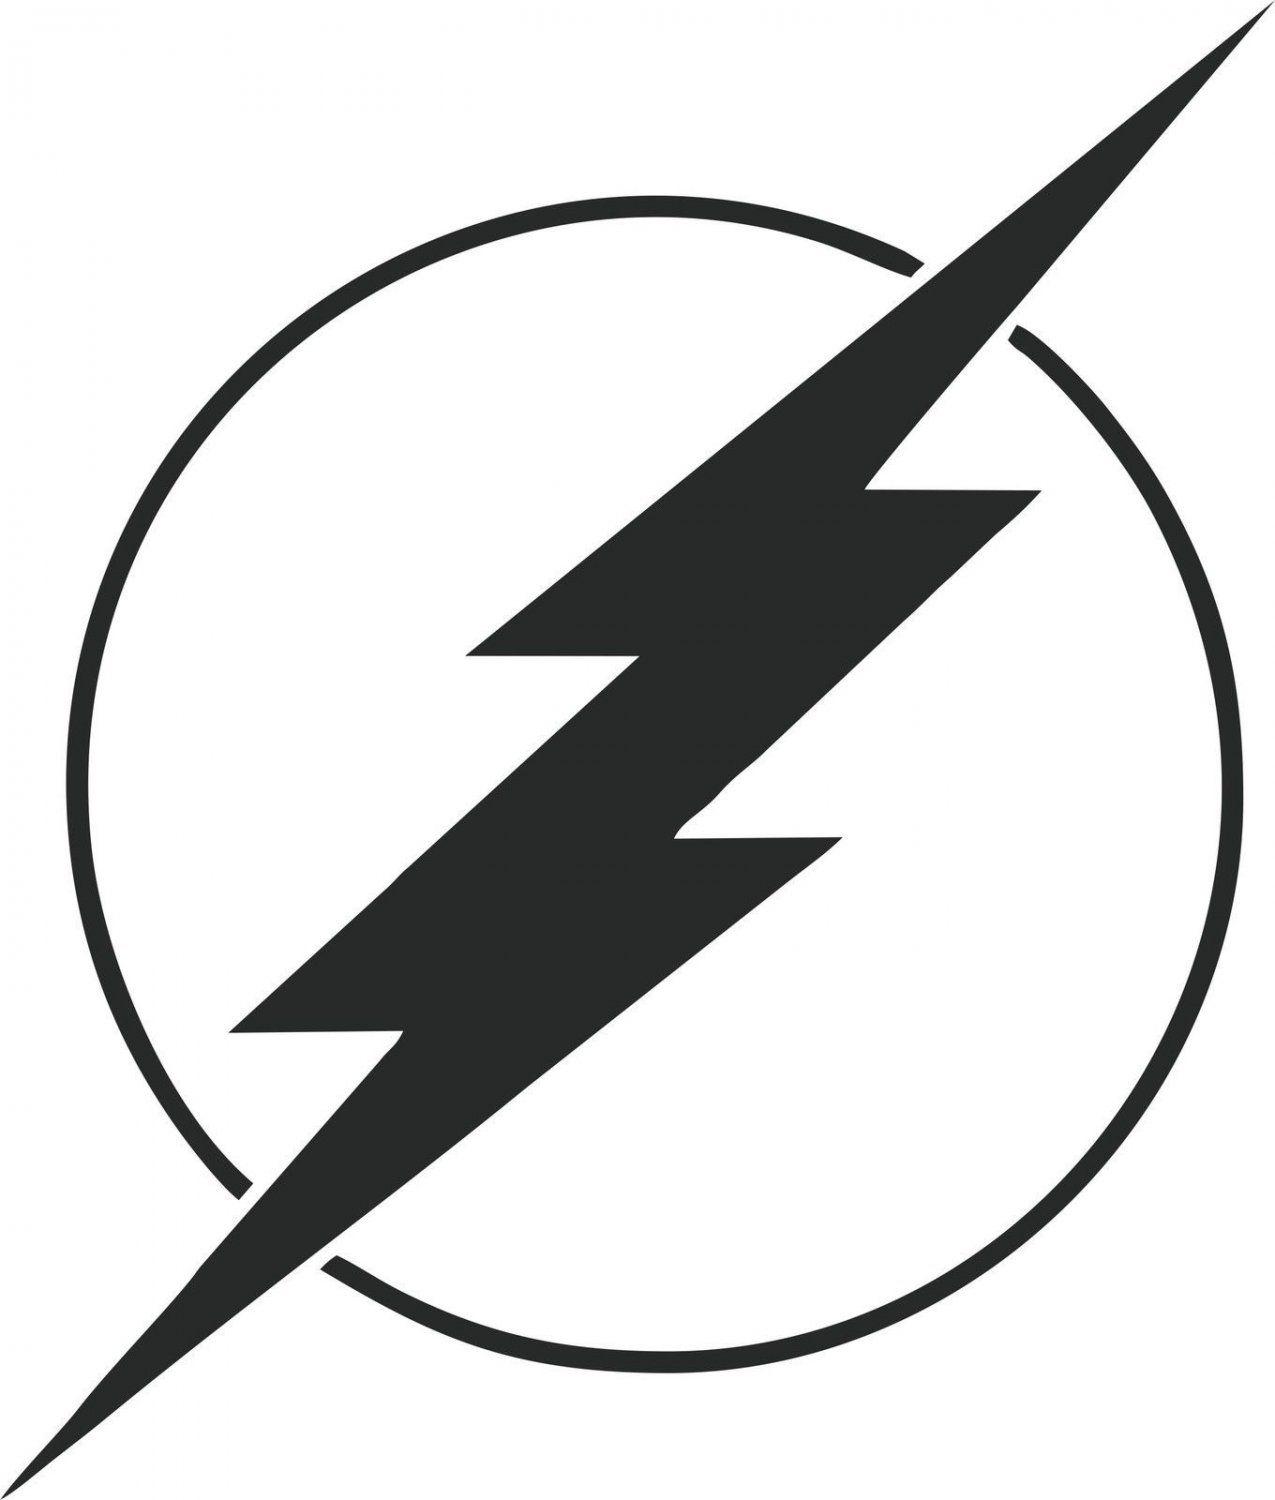 Lighting Bolt Car Logo - Sideways lightning bolt car Logos